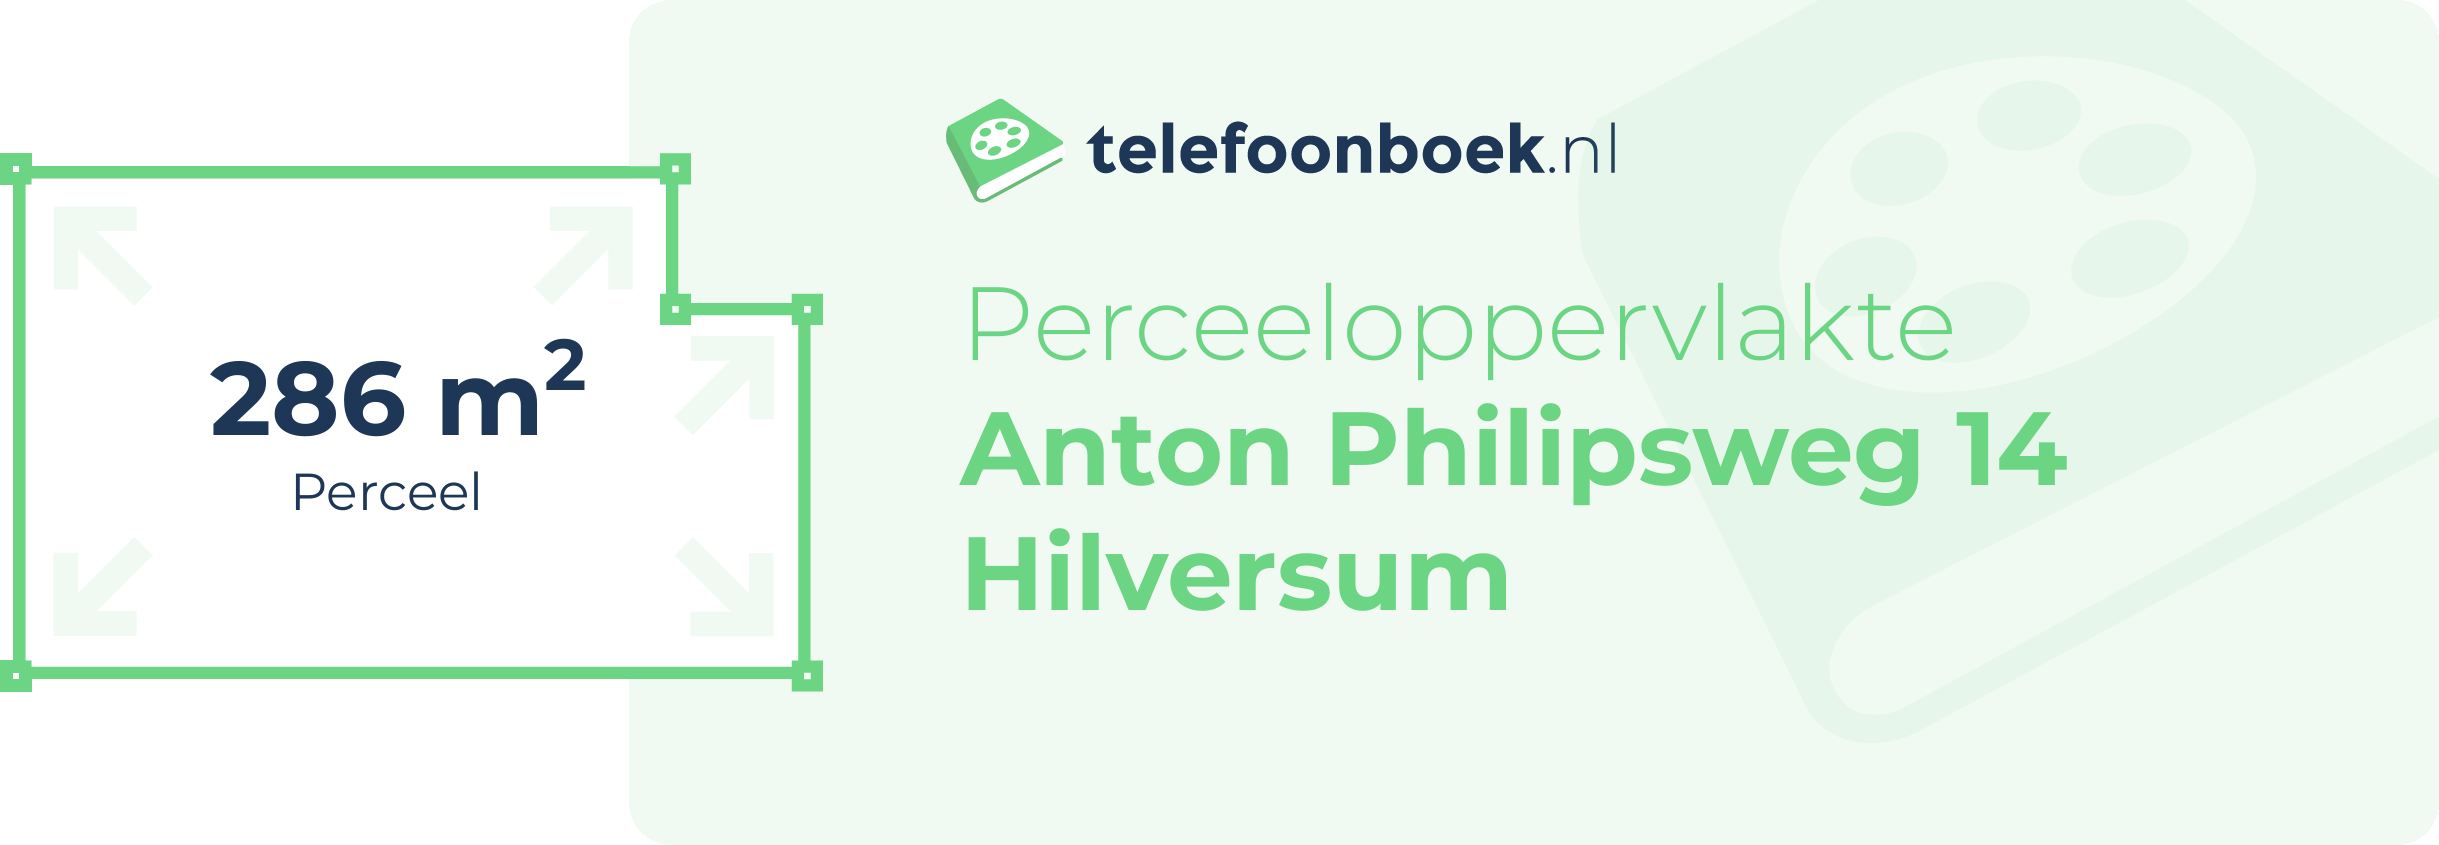 Perceeloppervlakte Anton Philipsweg 14 Hilversum